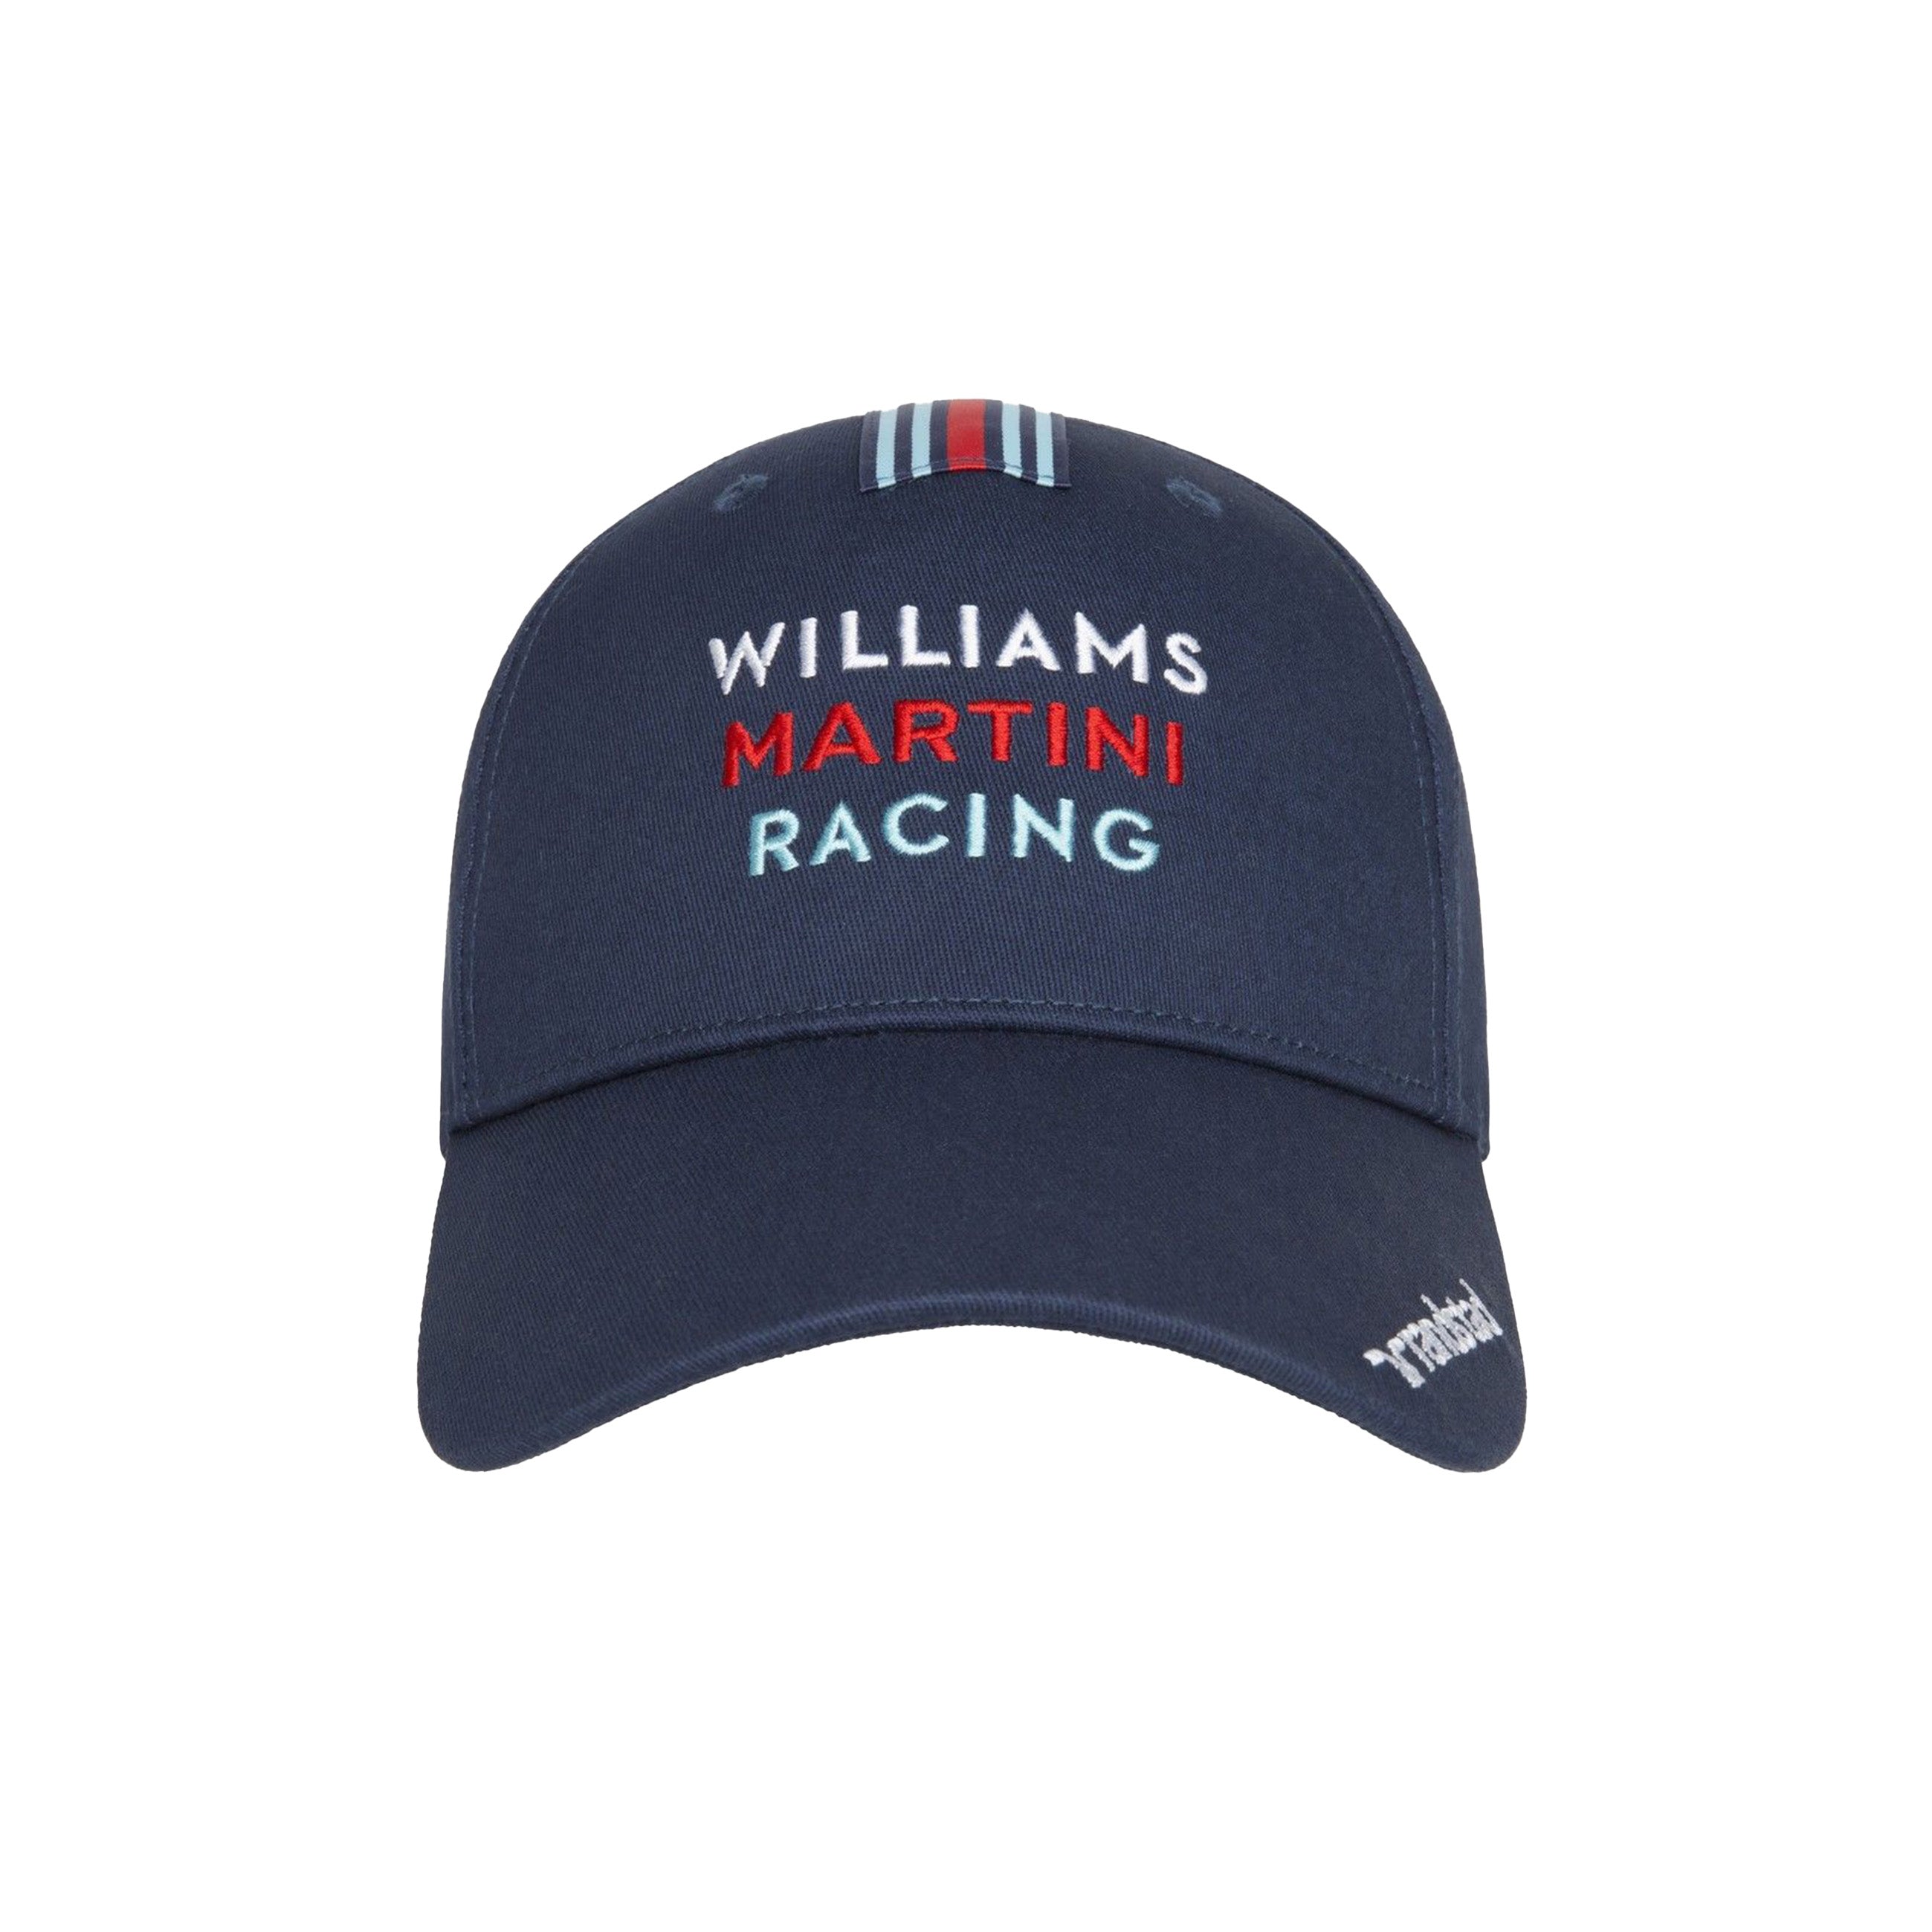 Williams Martini Racing Felipe Massa Driver's Hat Blue